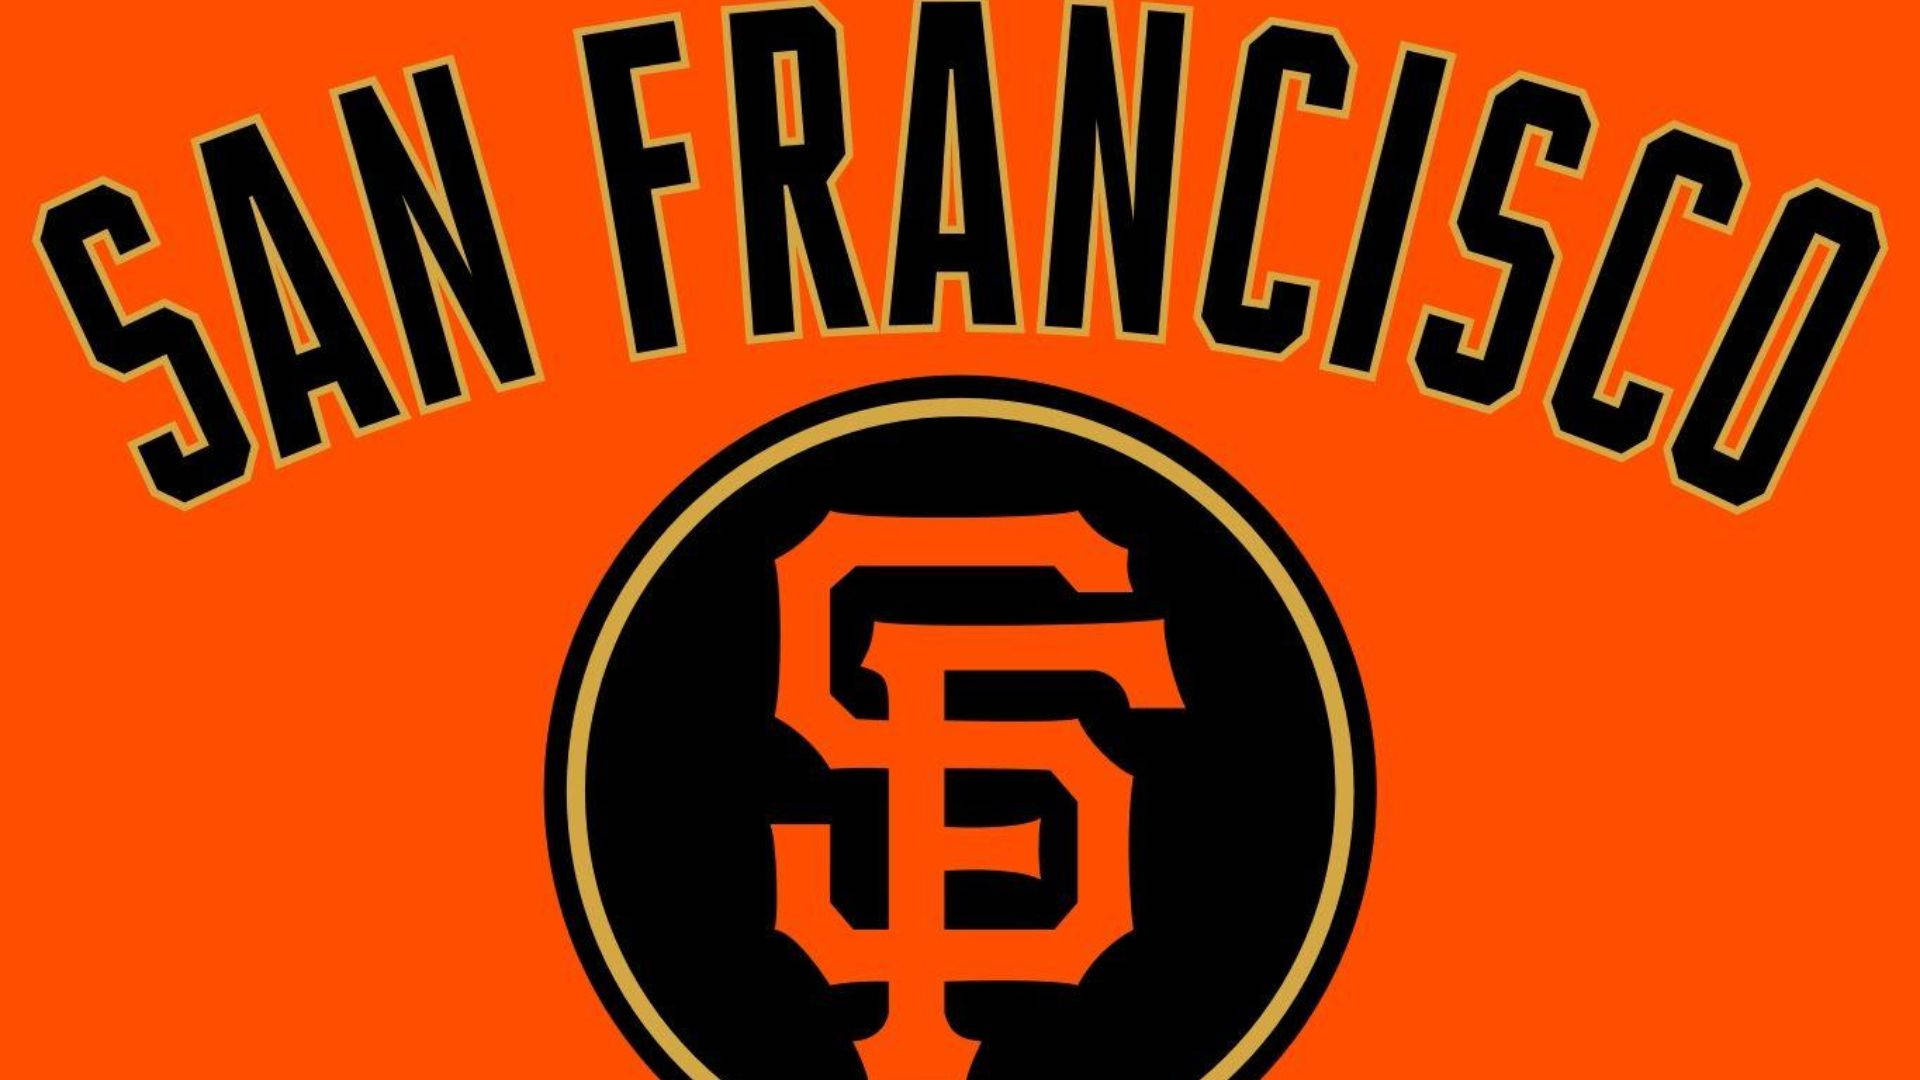 San Francisco Giants On Orange Backdrop